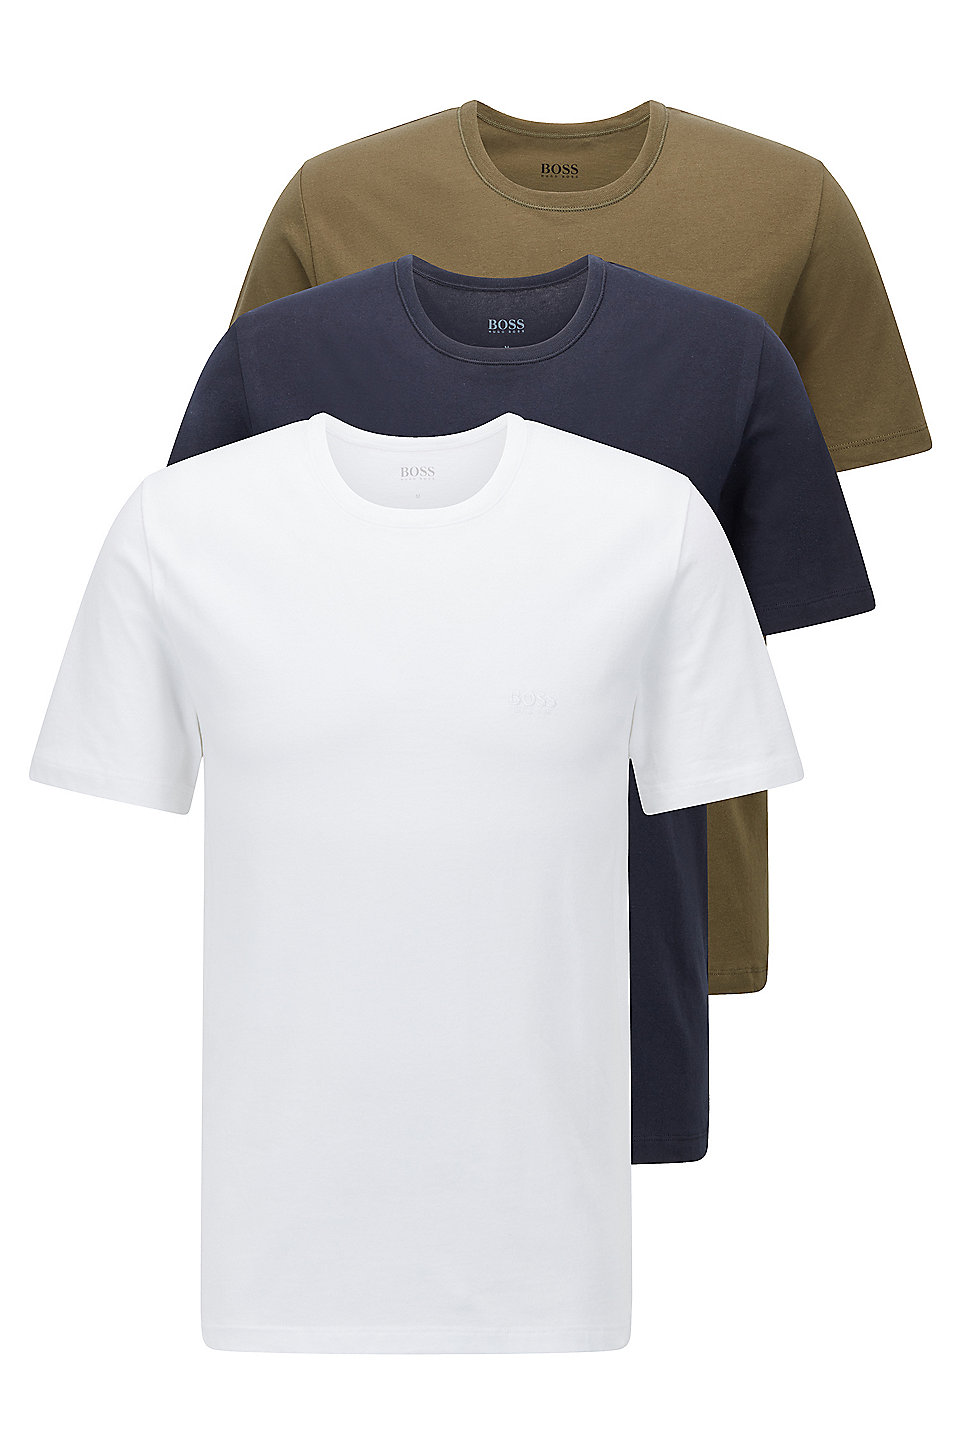 Hugo Boss Mens 3-Pack Round Neck Regular Fit Short Sleeve T-Shirts 